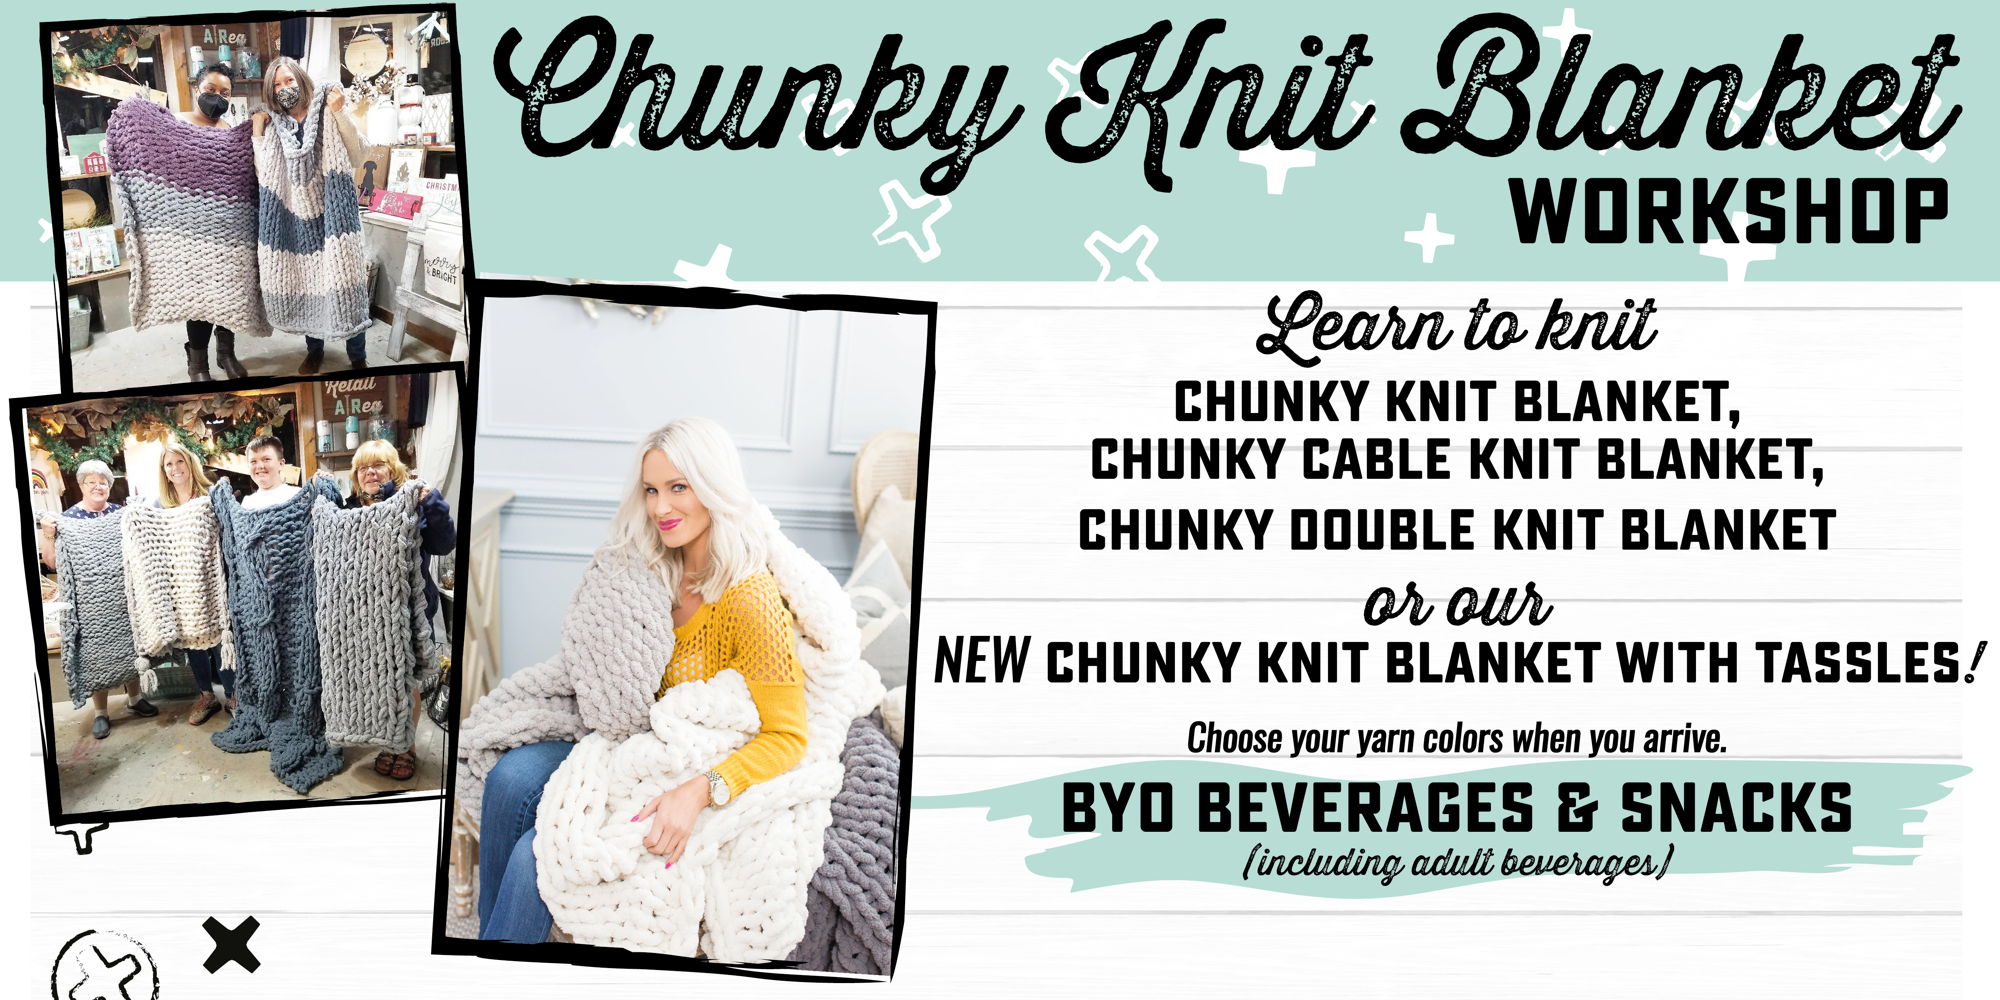 Chunky Knit Blanket Workshop promotional image